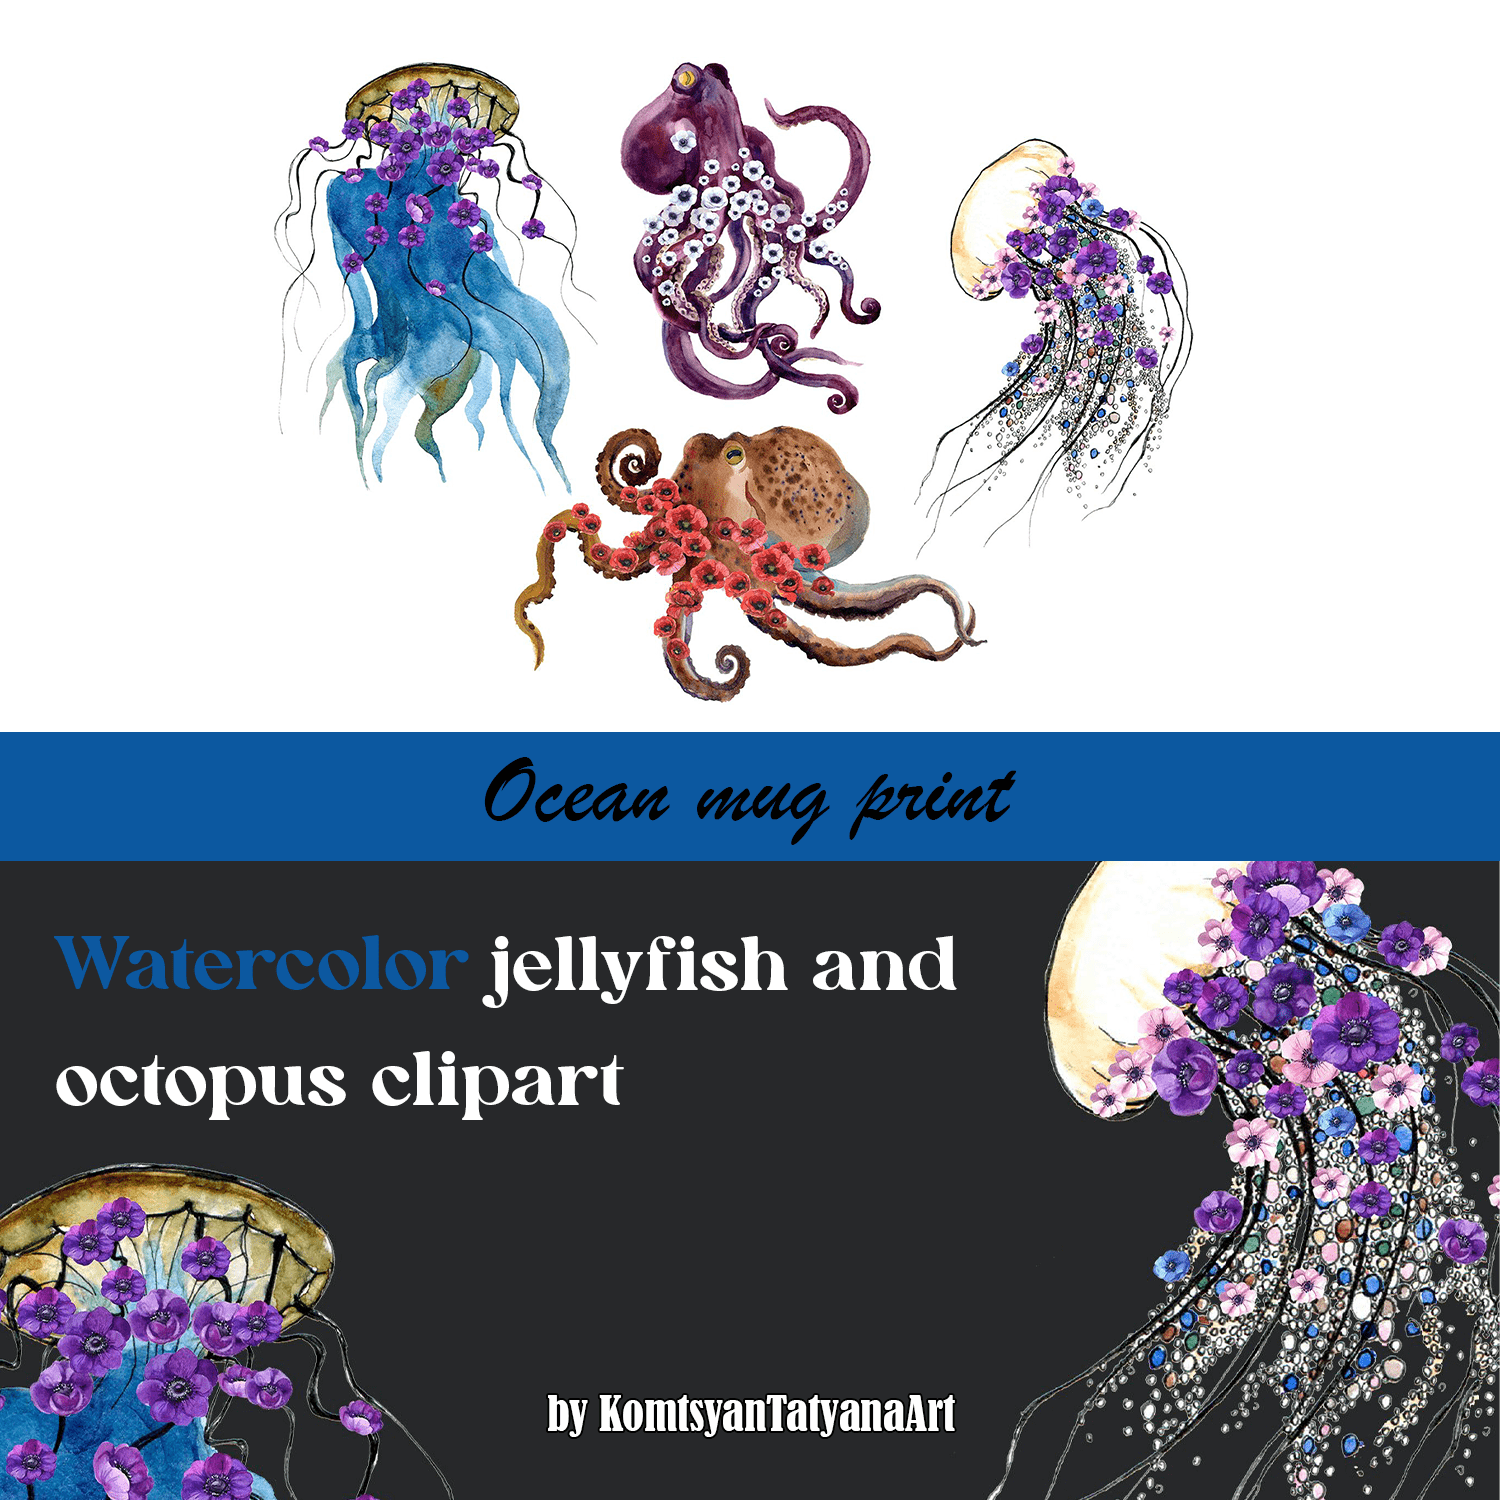 Watercolor jellyfish and octopus clipart. Ocean mug print cover.